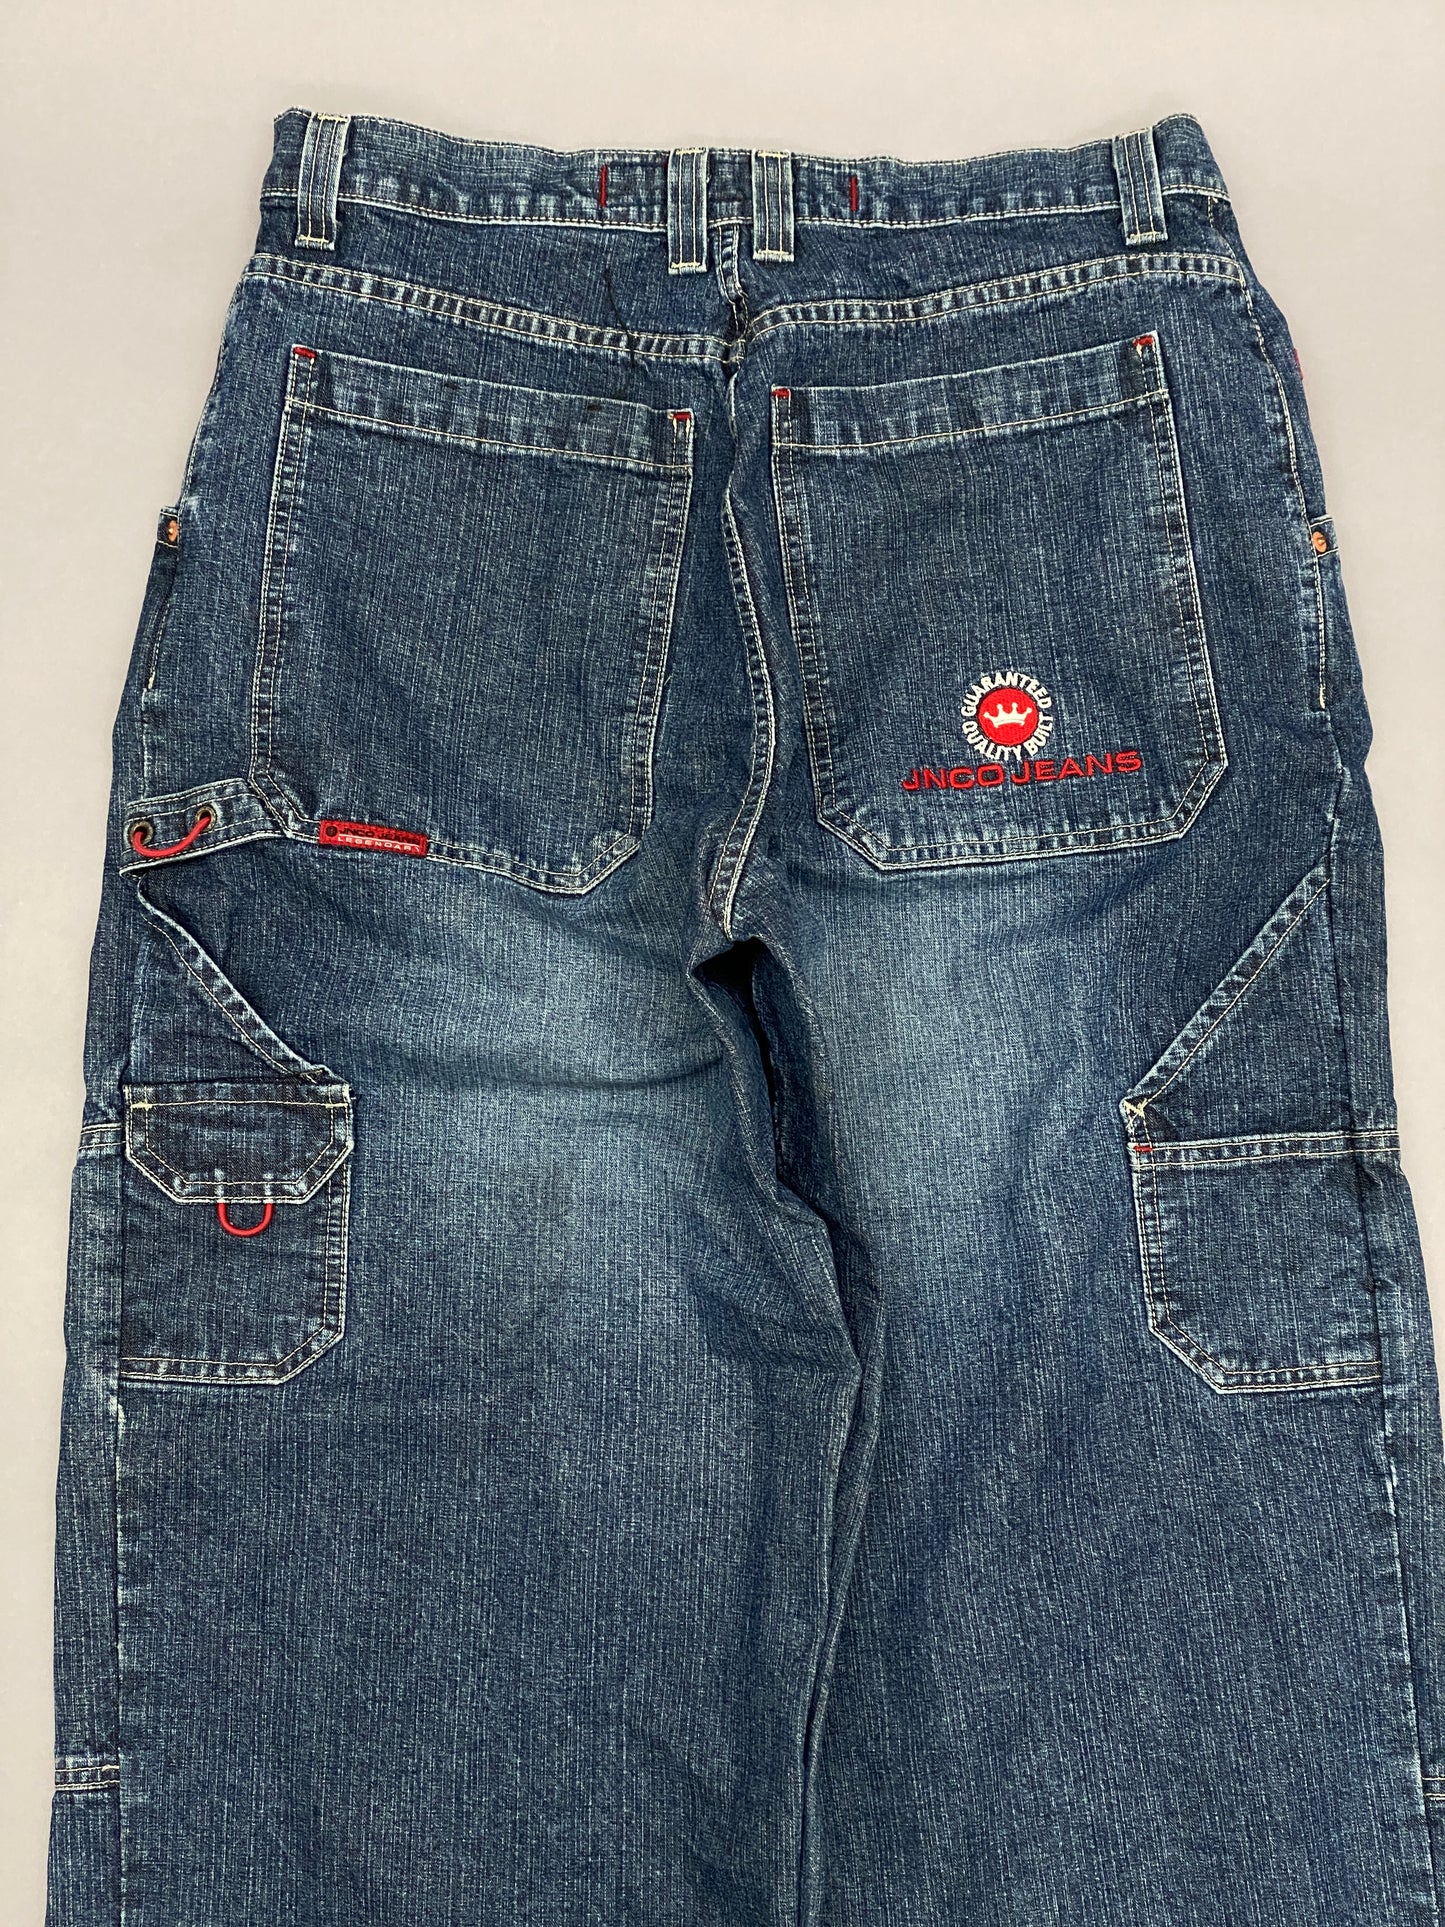 JNCO Carpenter Vintage Jeans - 36x32